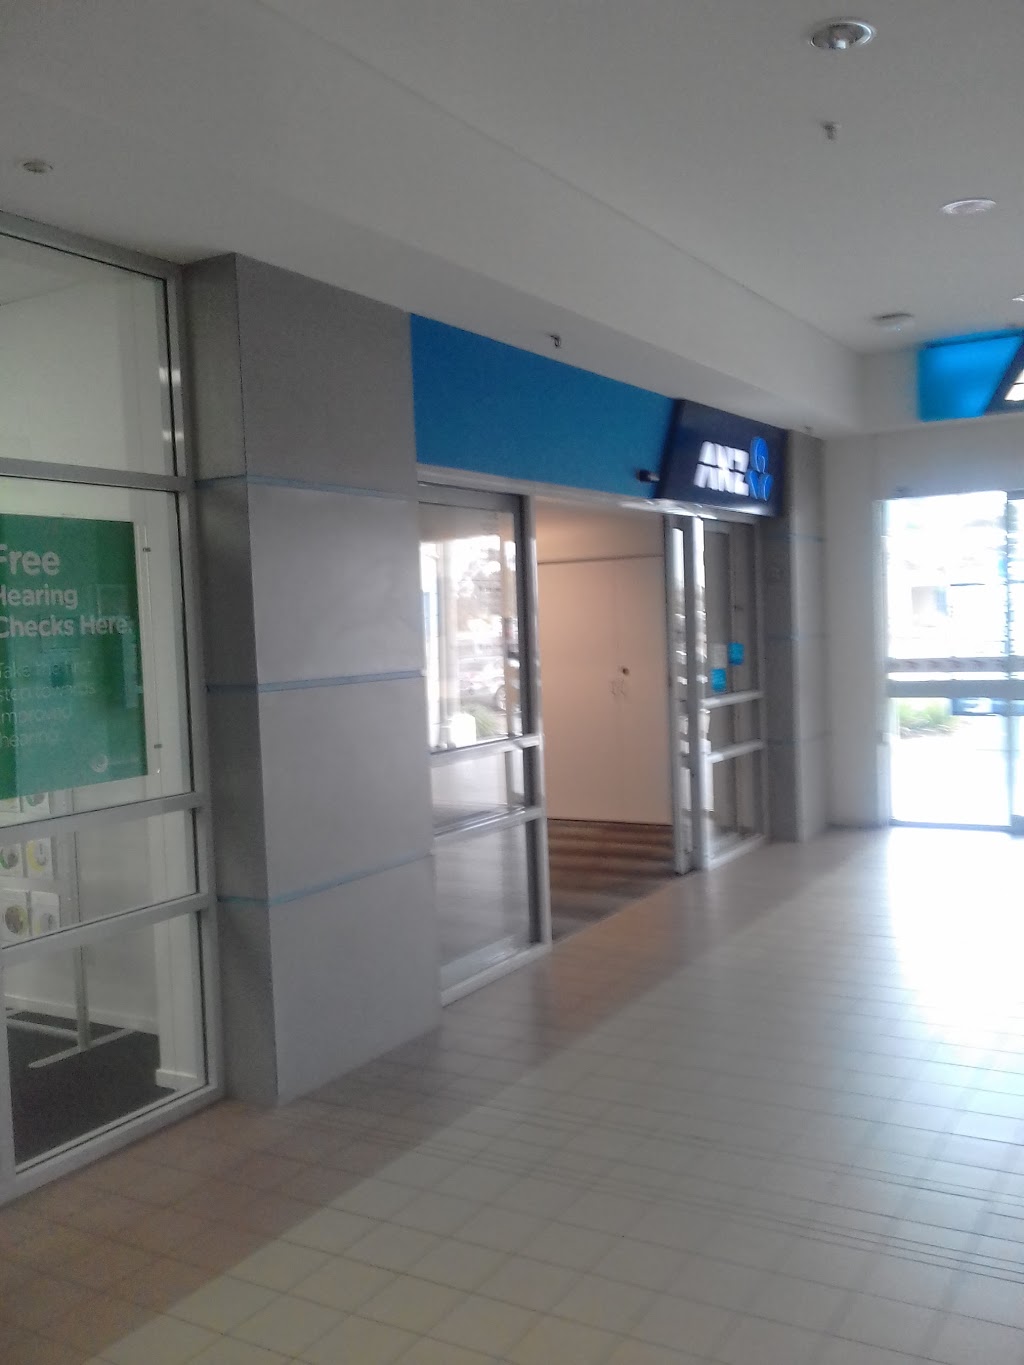 ANZ ATM Brandon Park (Smart) | atm | Brandon Park Centro Shop, 54 Ferntree Gully Rd, Wheelers Hill VIC 3170, Australia | 131314 OR +61 131314